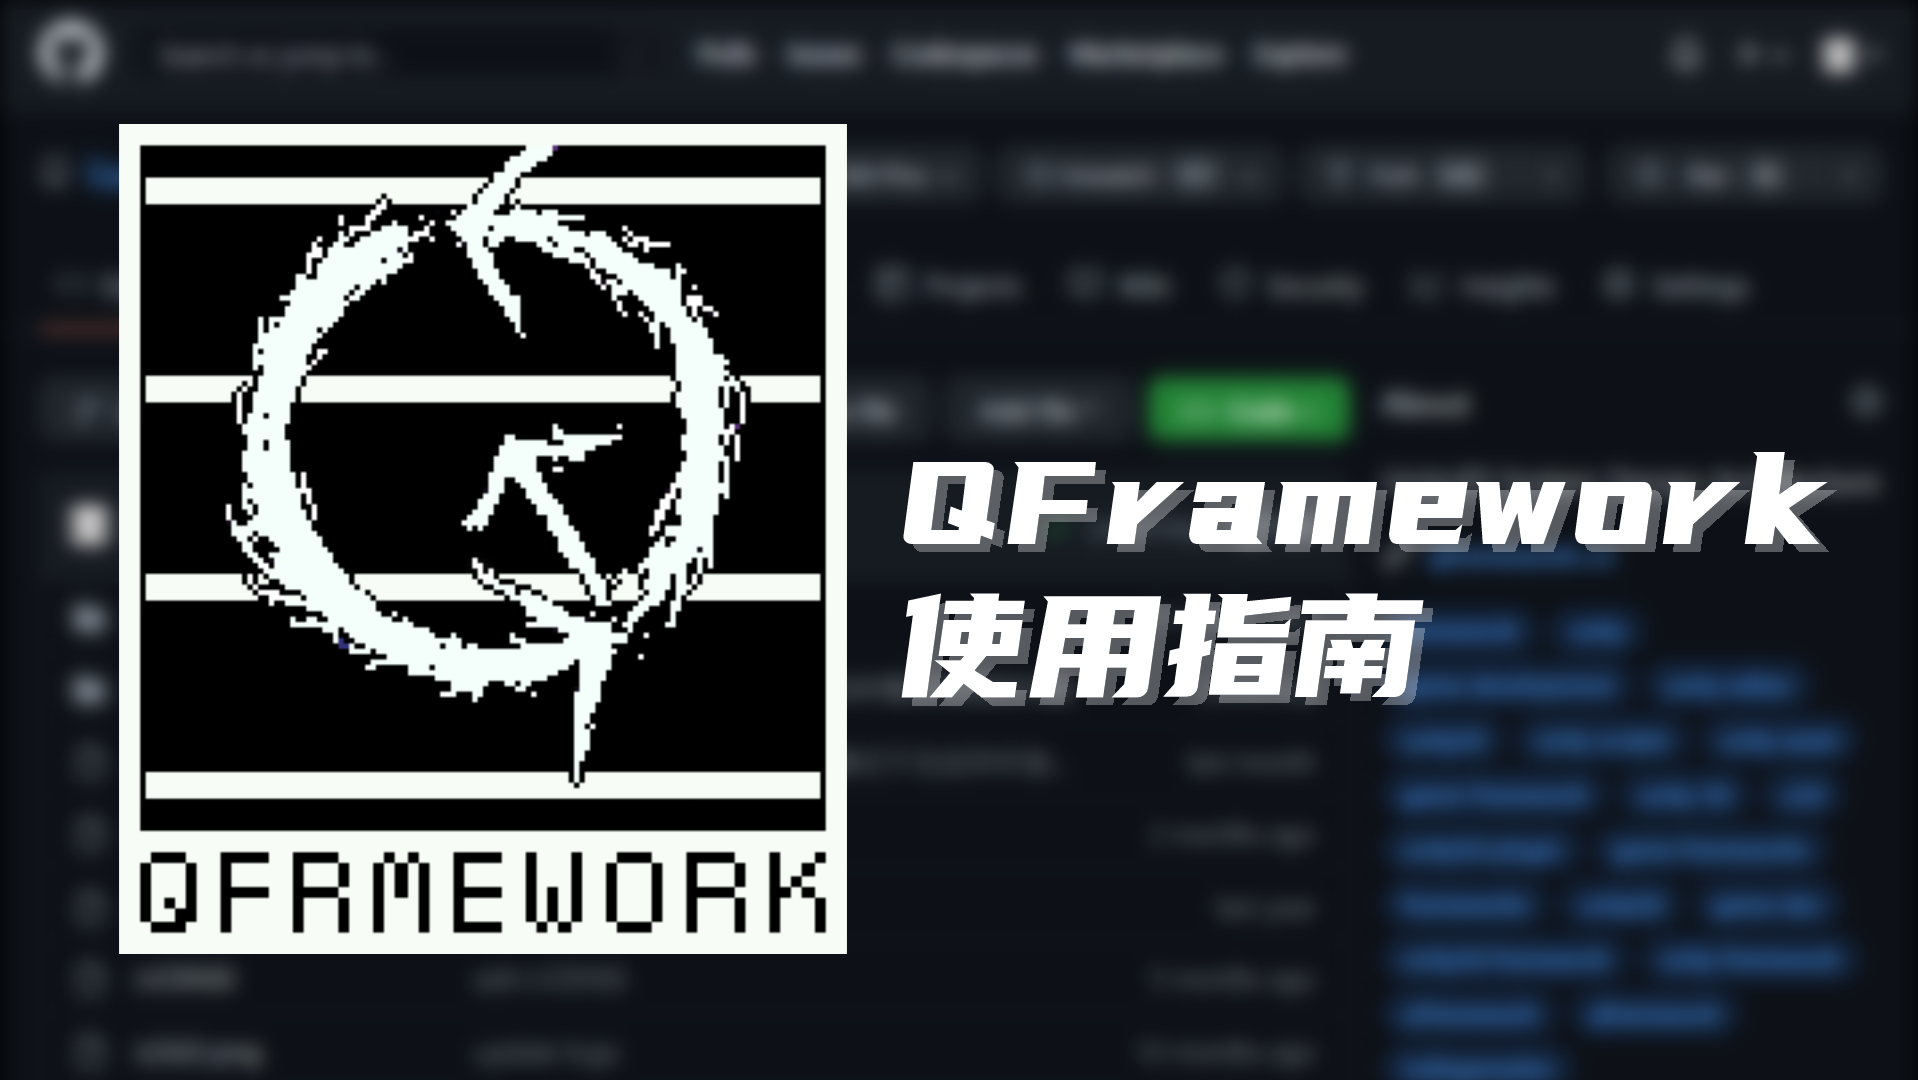 【Unity 框架】QFramework v1.0 使用指南 架构篇：16. 内置工具：EasyEvent | Unity 游戏框架 | Unity 游戏开发 | Unity 独立游戏 